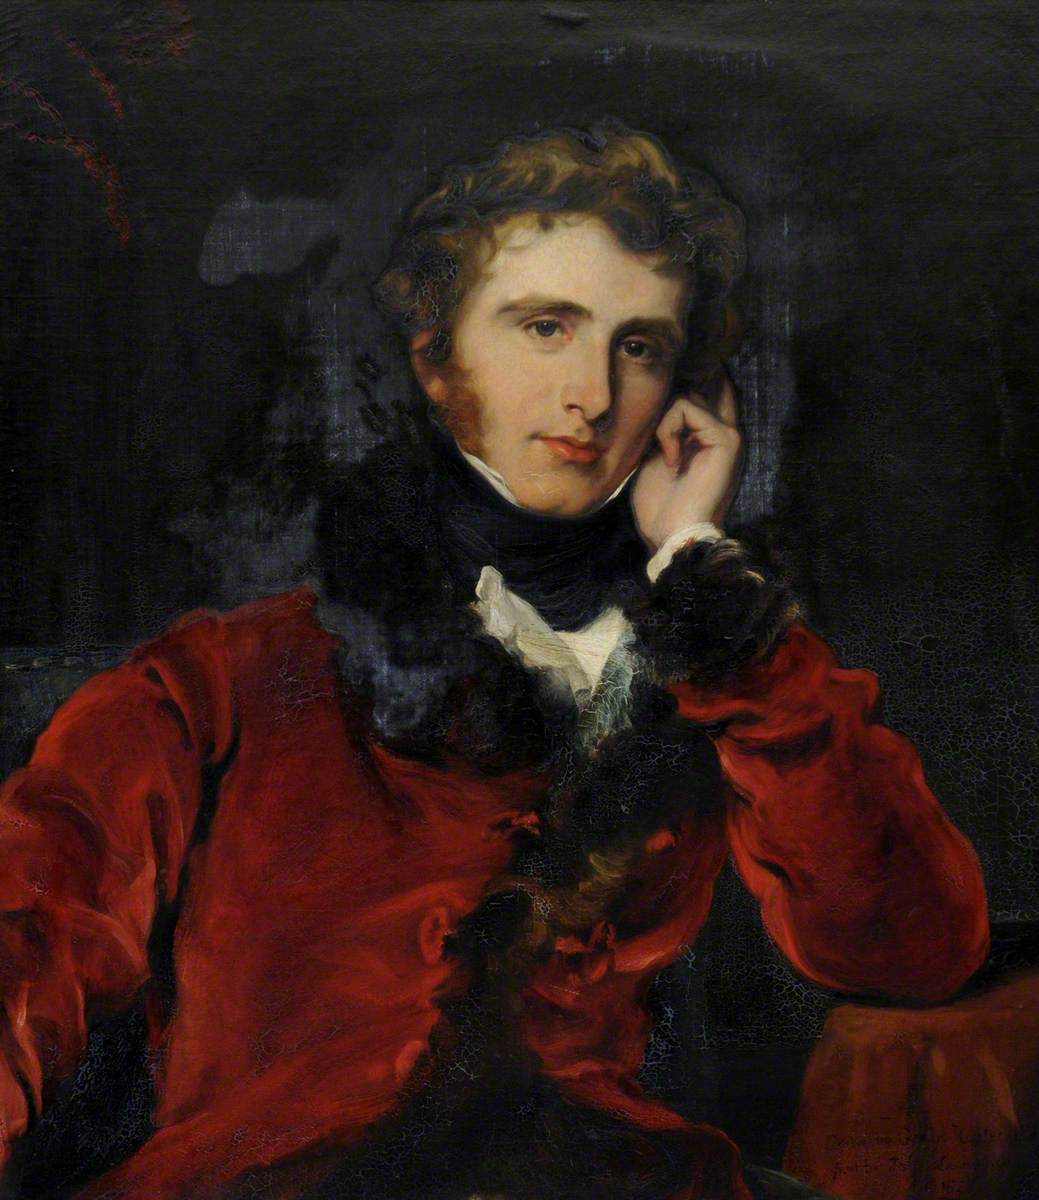 George James Welbore Agar-Ellis (1797–1833), 1st Baron Dover, MP, FRS, FSA